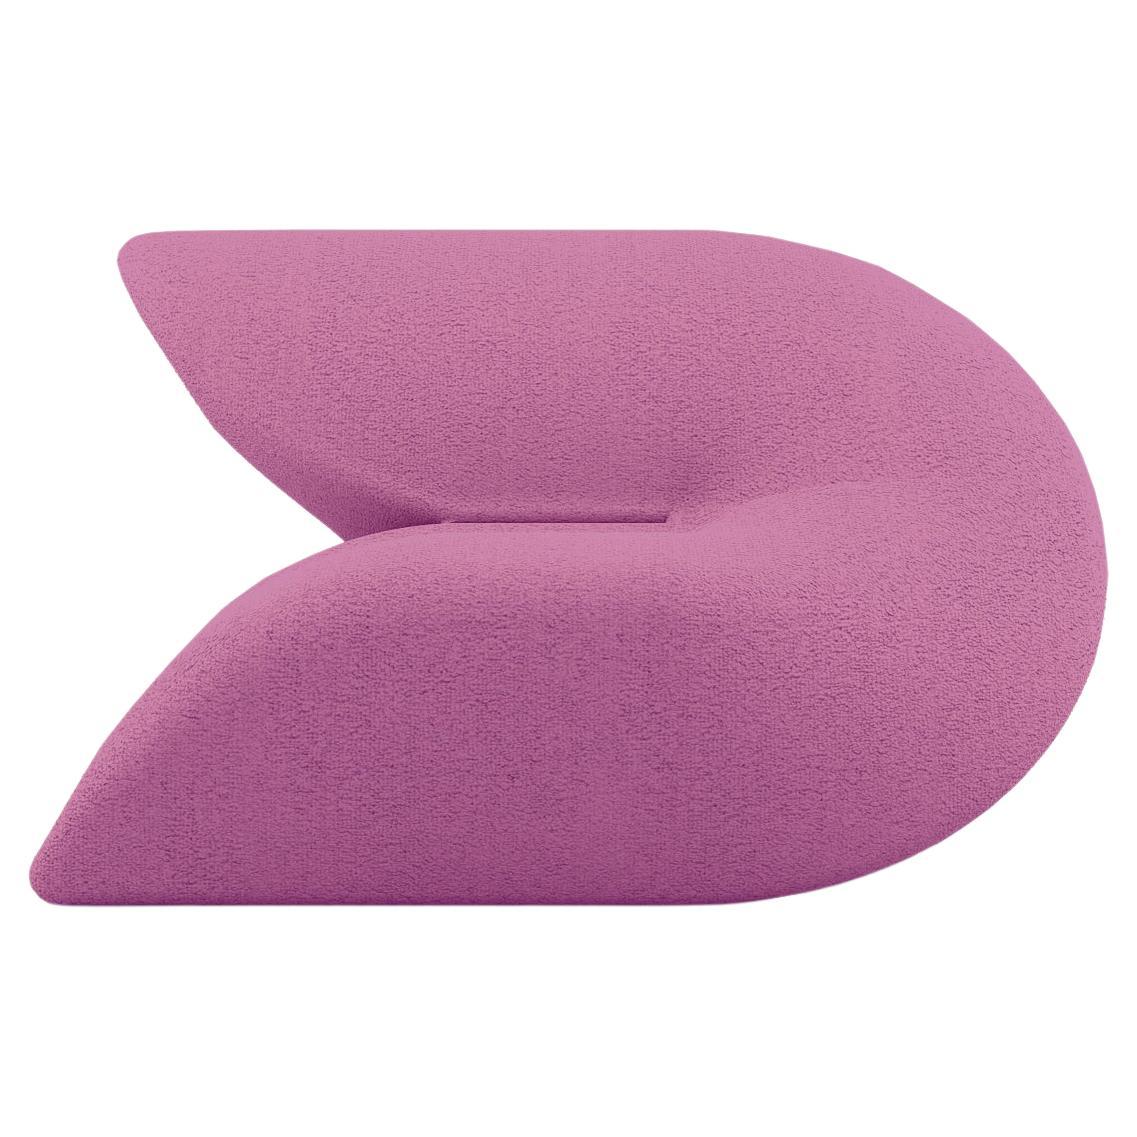 Delta Armchair - Modern Violet Upholstered Armchair For Sale